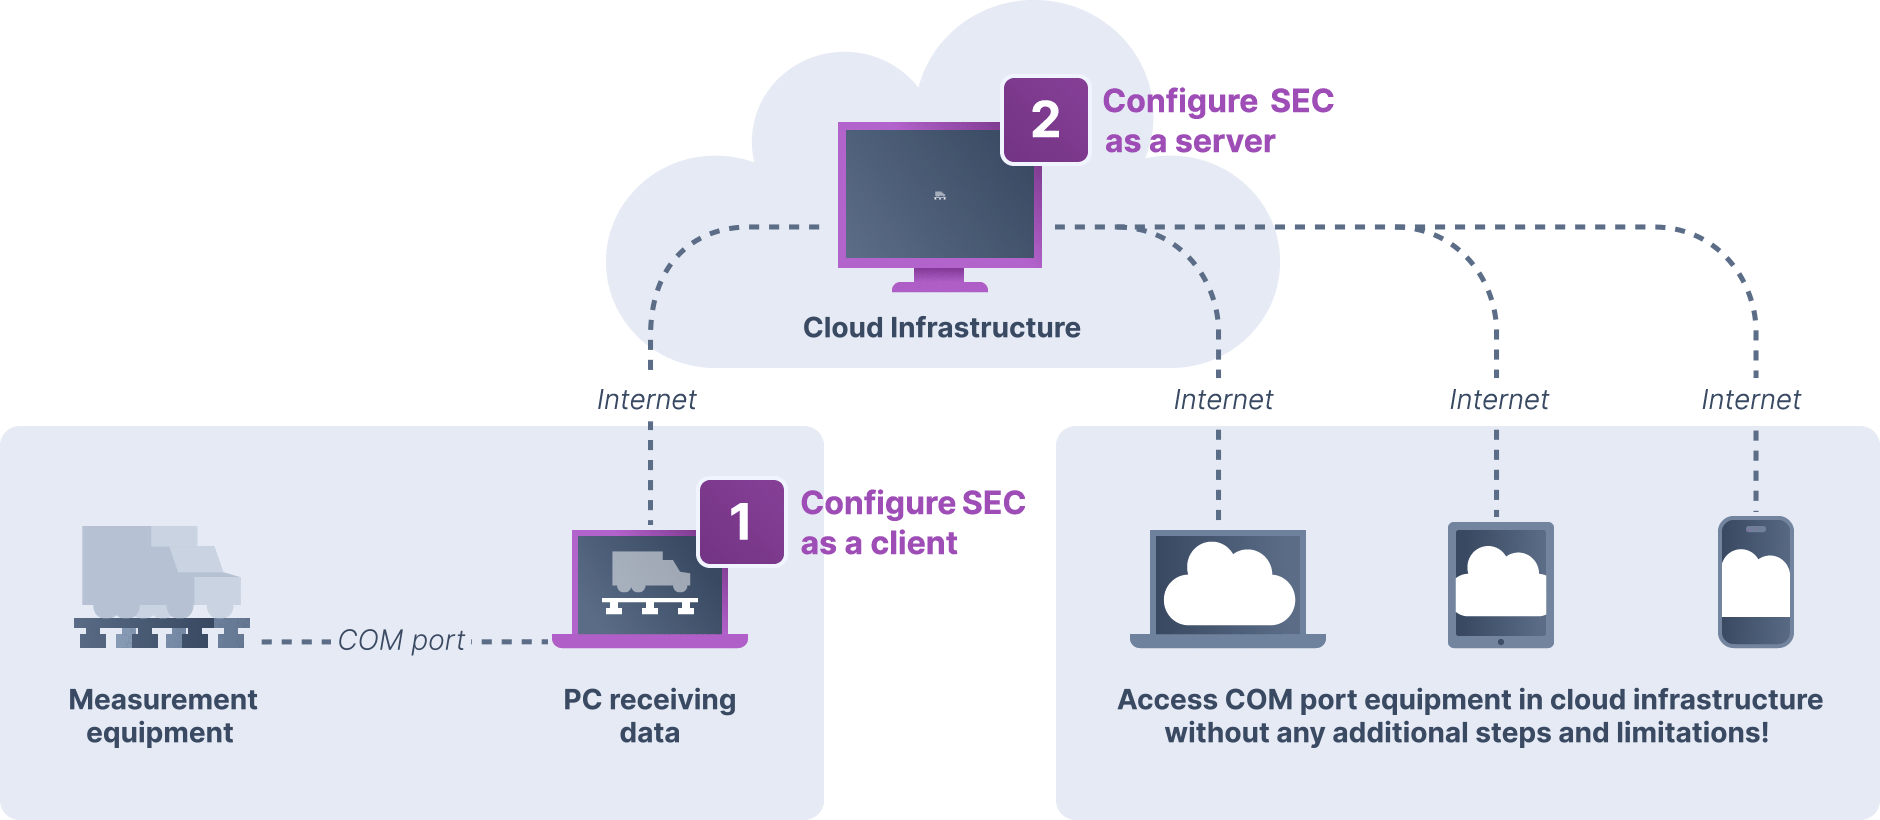 Serial over IP software usage scenario with cloud infrastructure